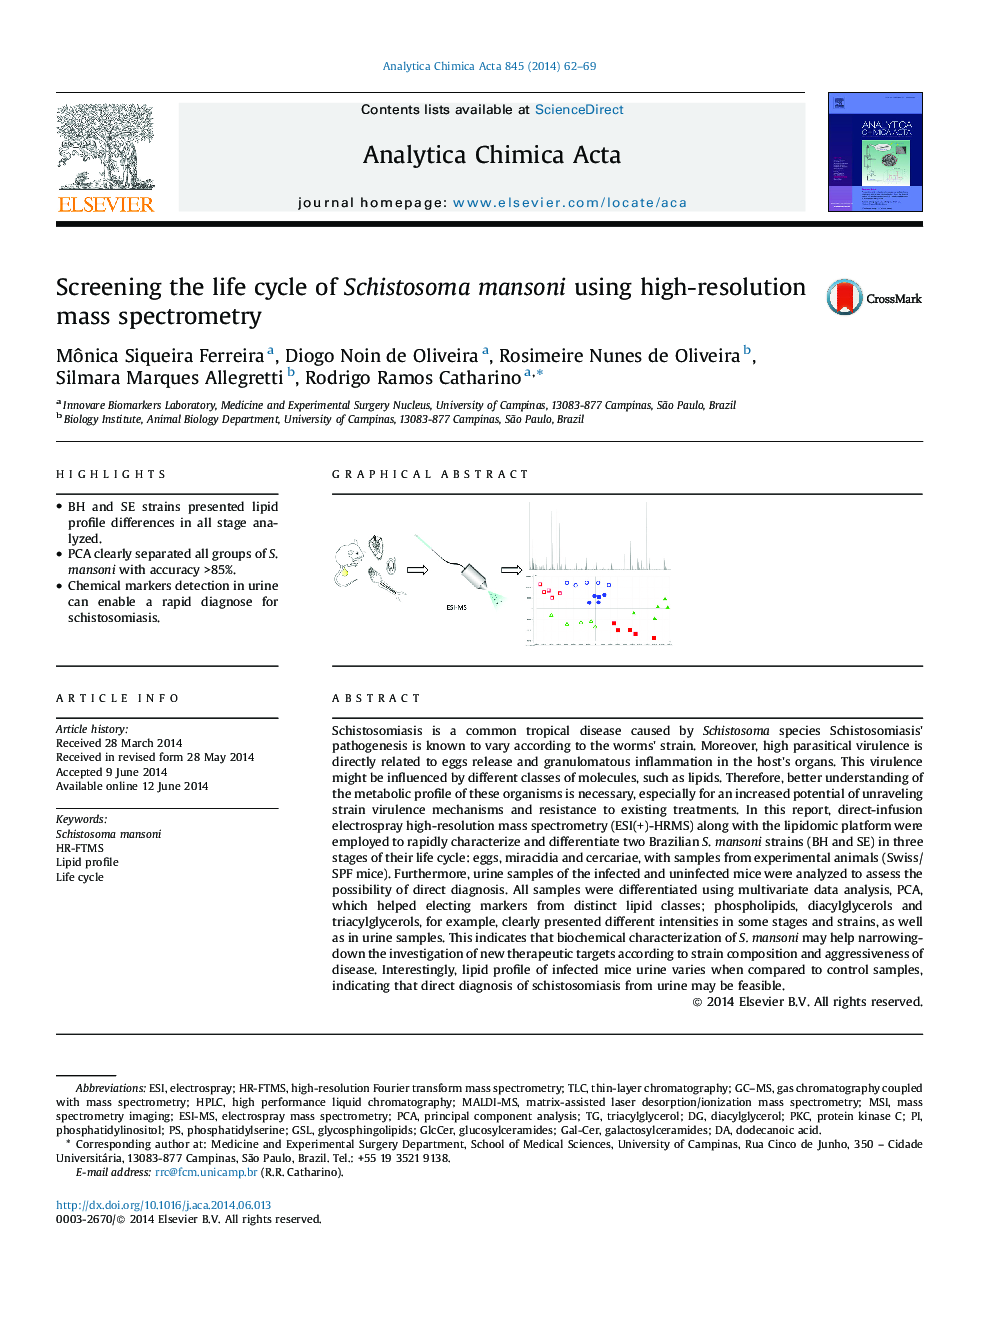 Screening the life cycle of Schistosomamansoni using high-resolution mass spectrometry